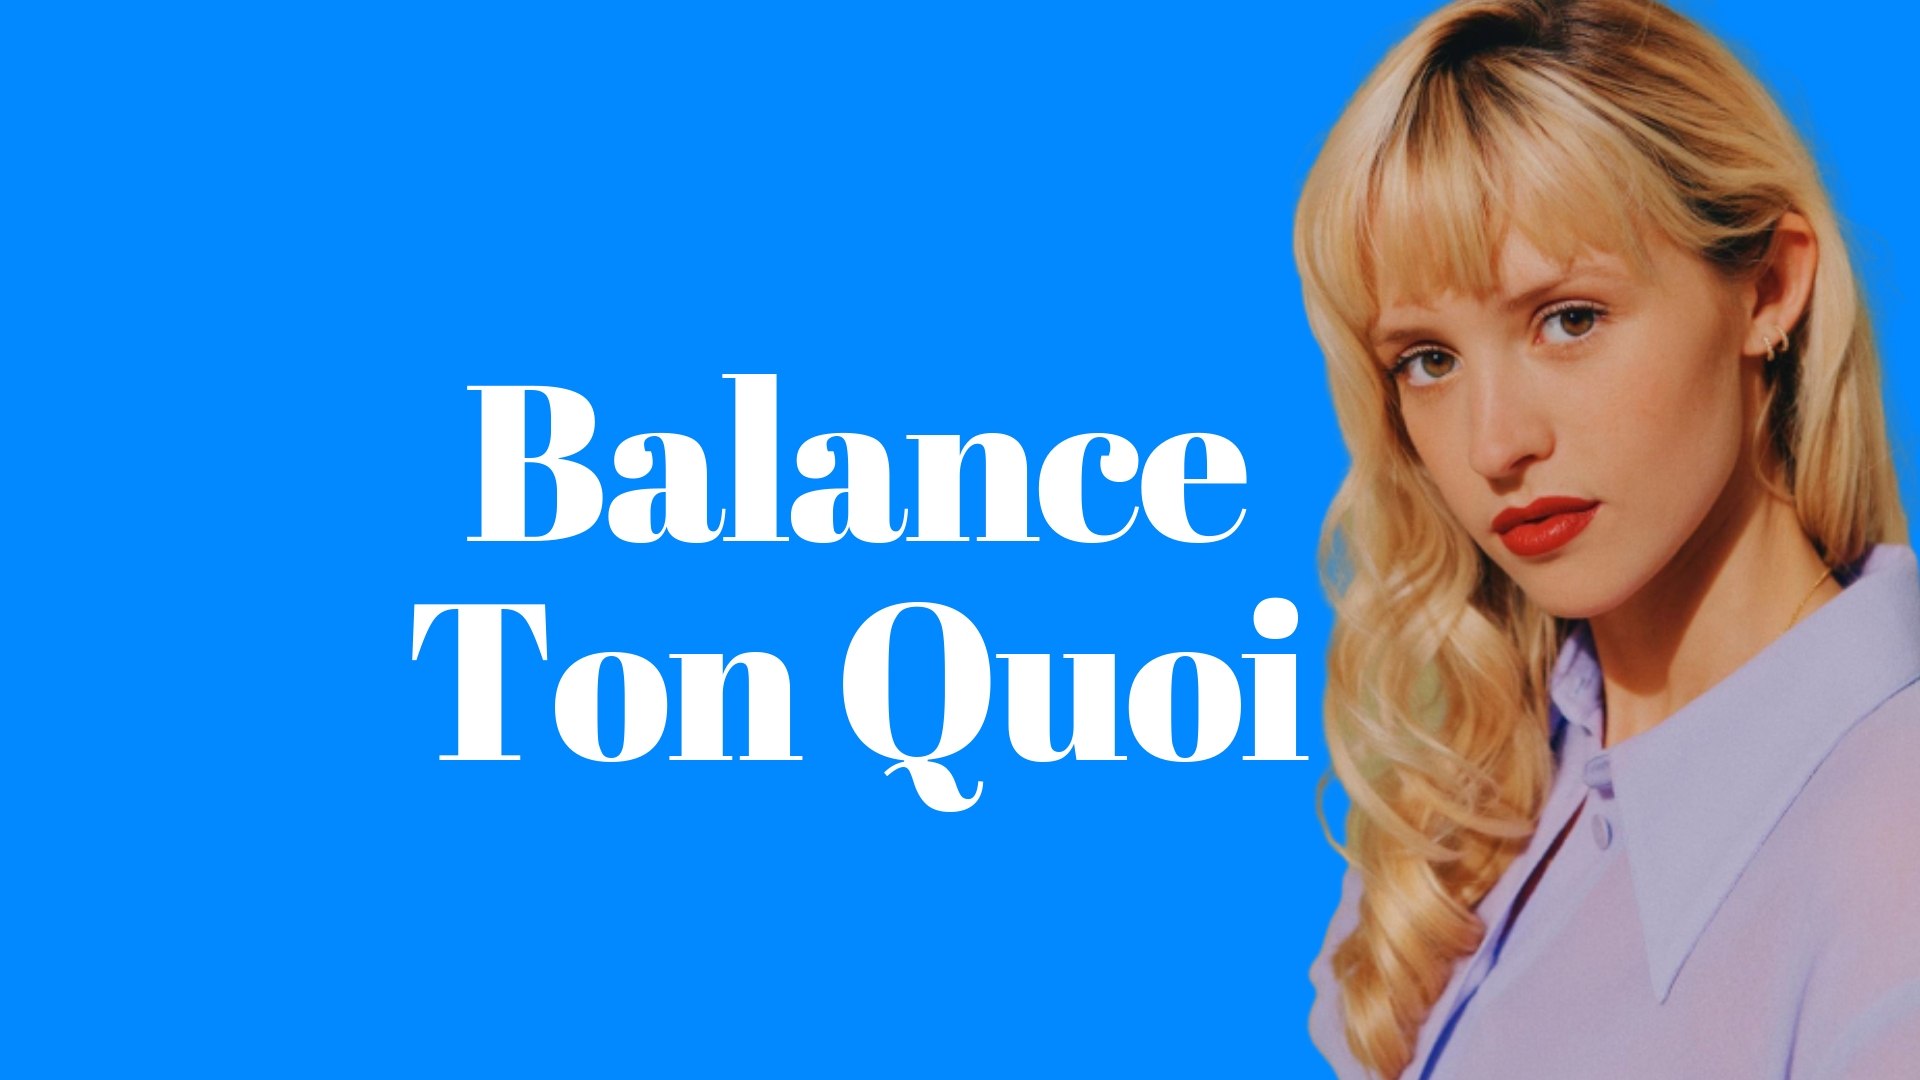 Angèle - Balance Ton Quoi (Paroles) - Vidéo Dailymotion